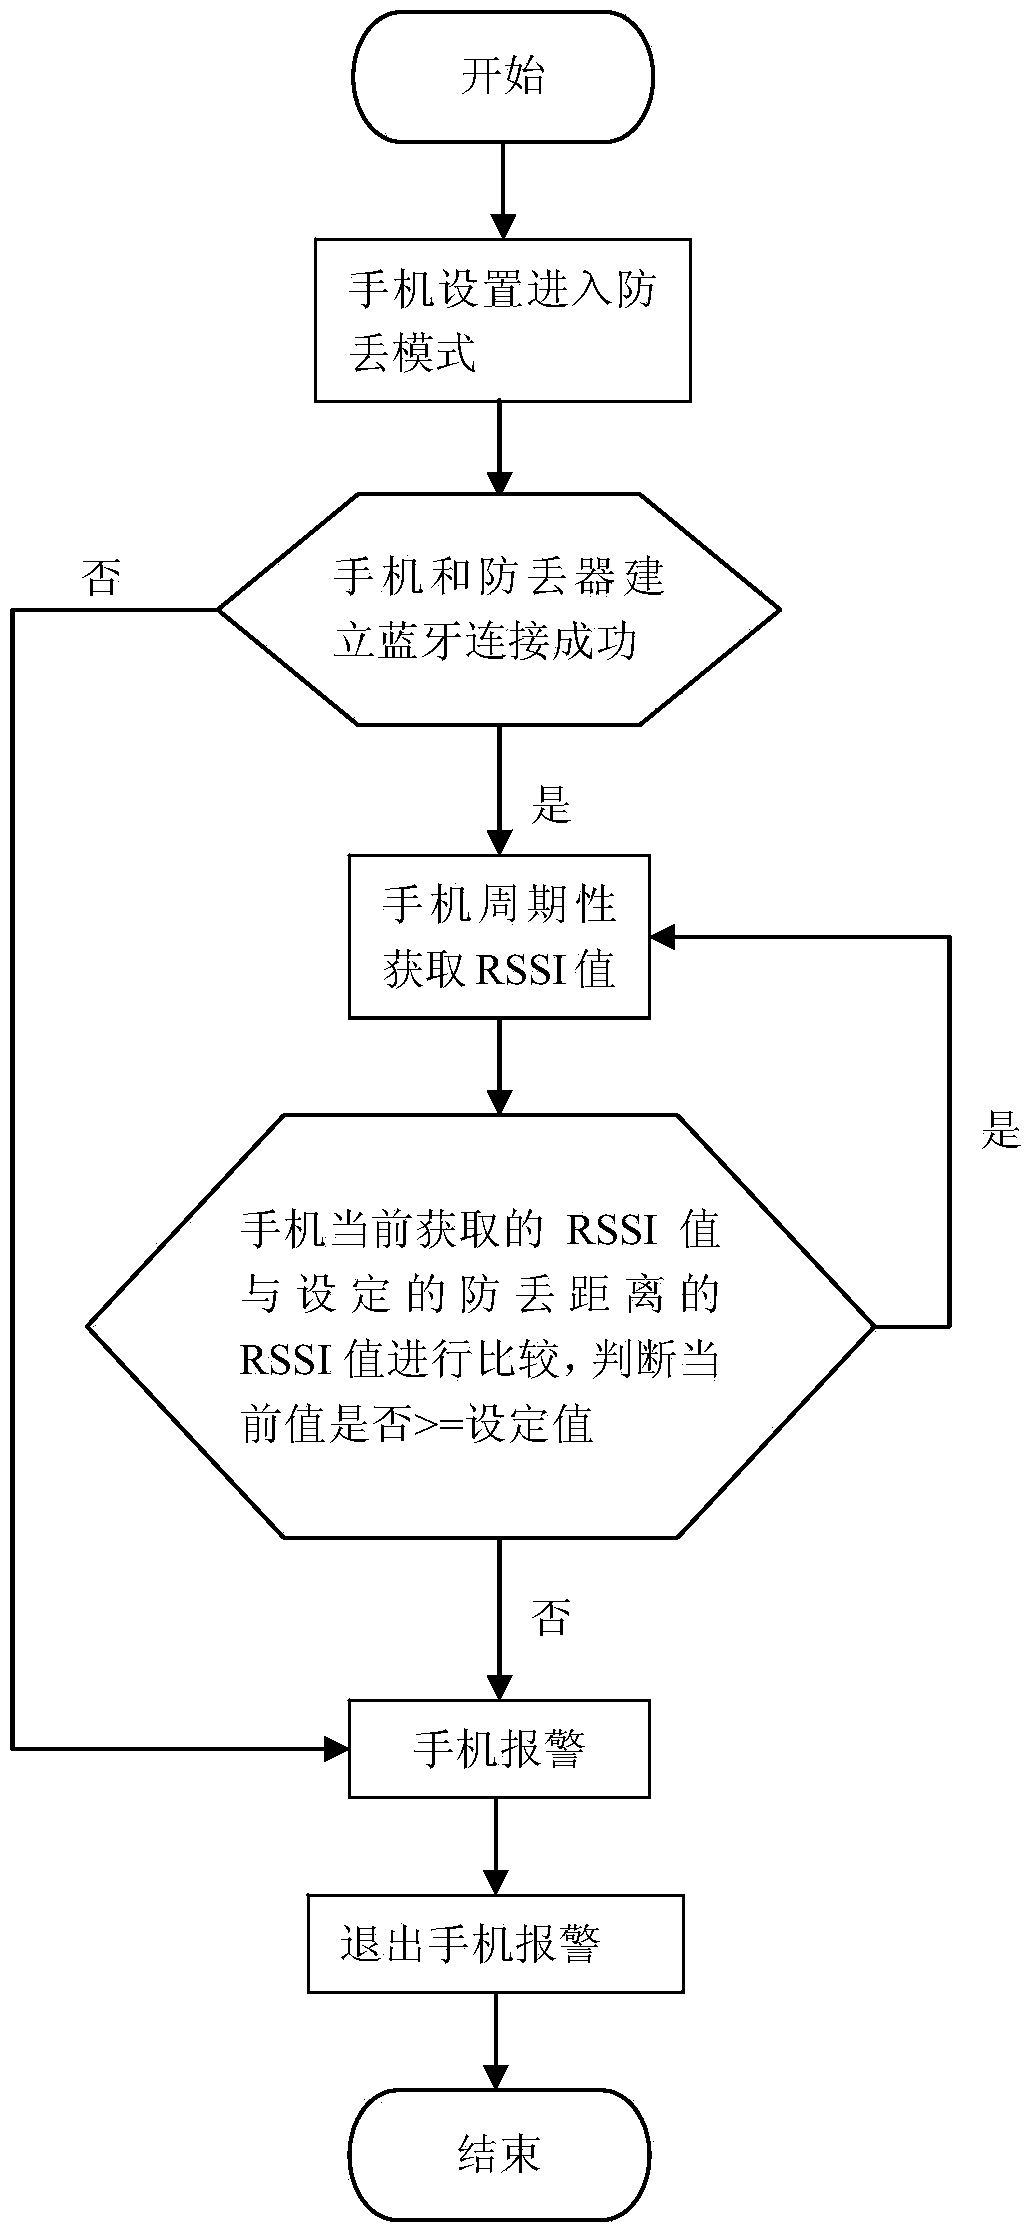 Implementation method for multifunctional anti-loss apparatus